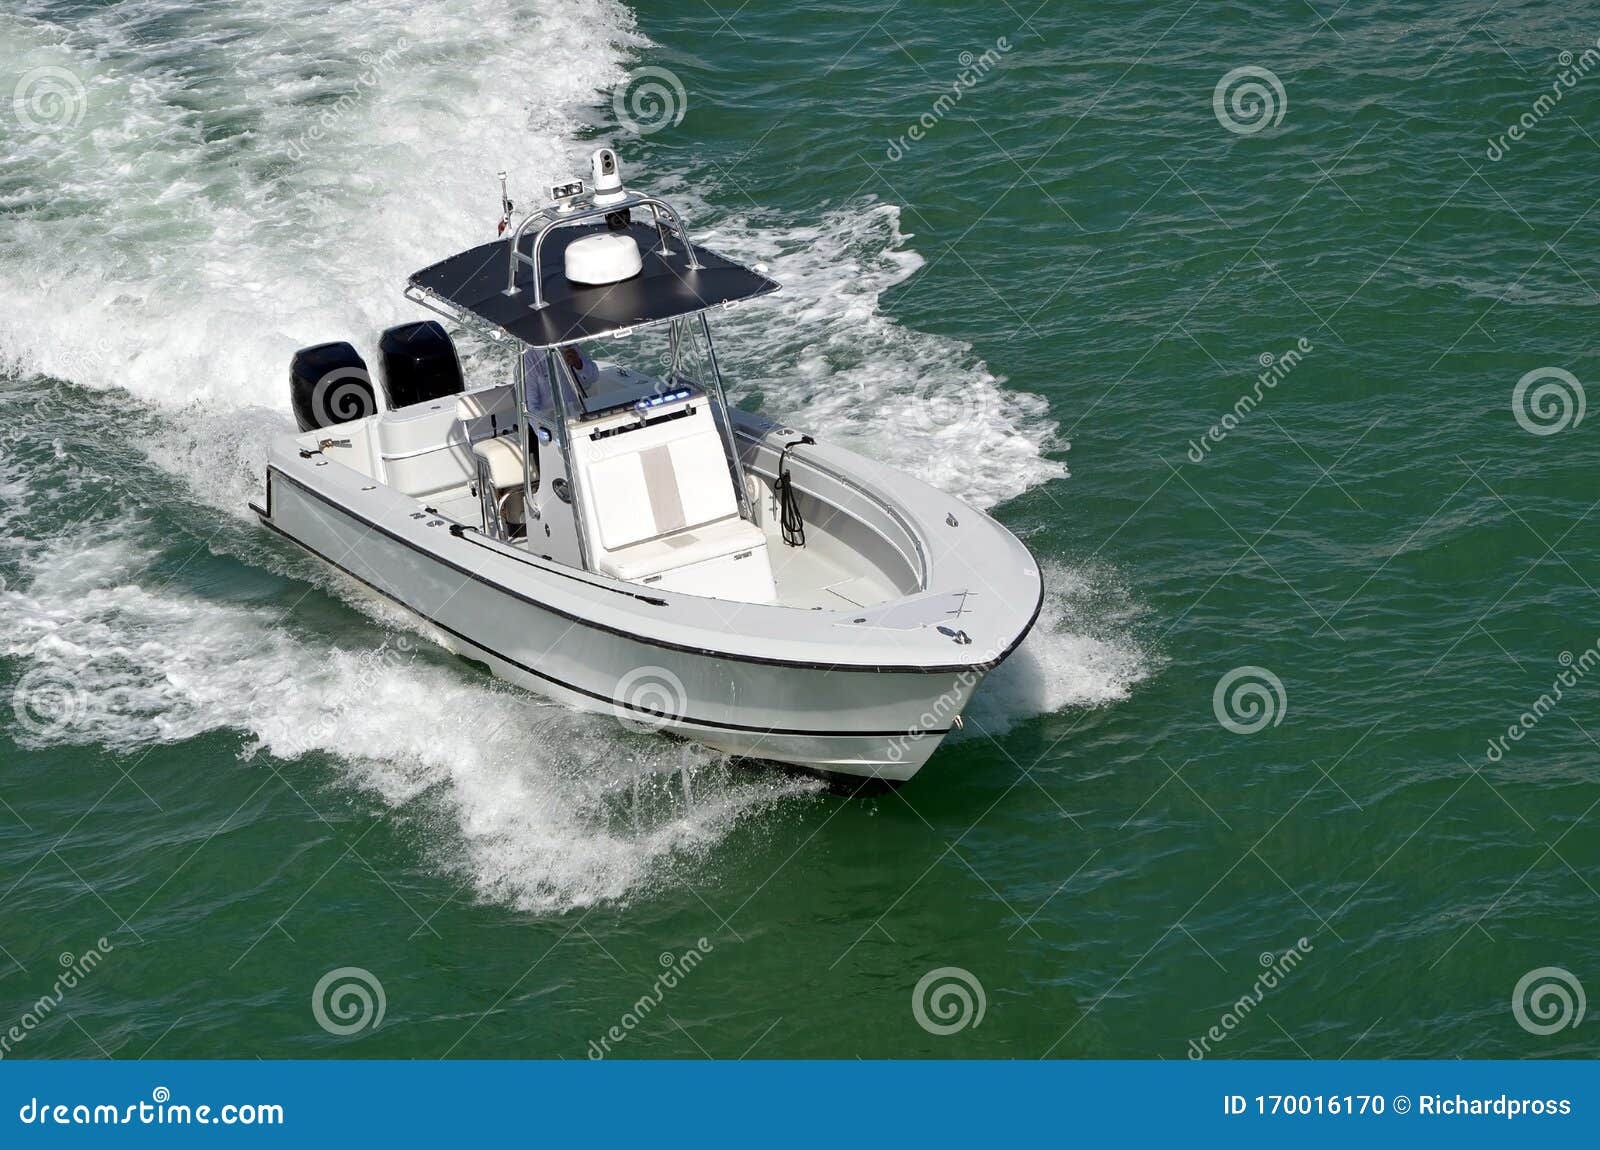 miami dade county police patrol boat